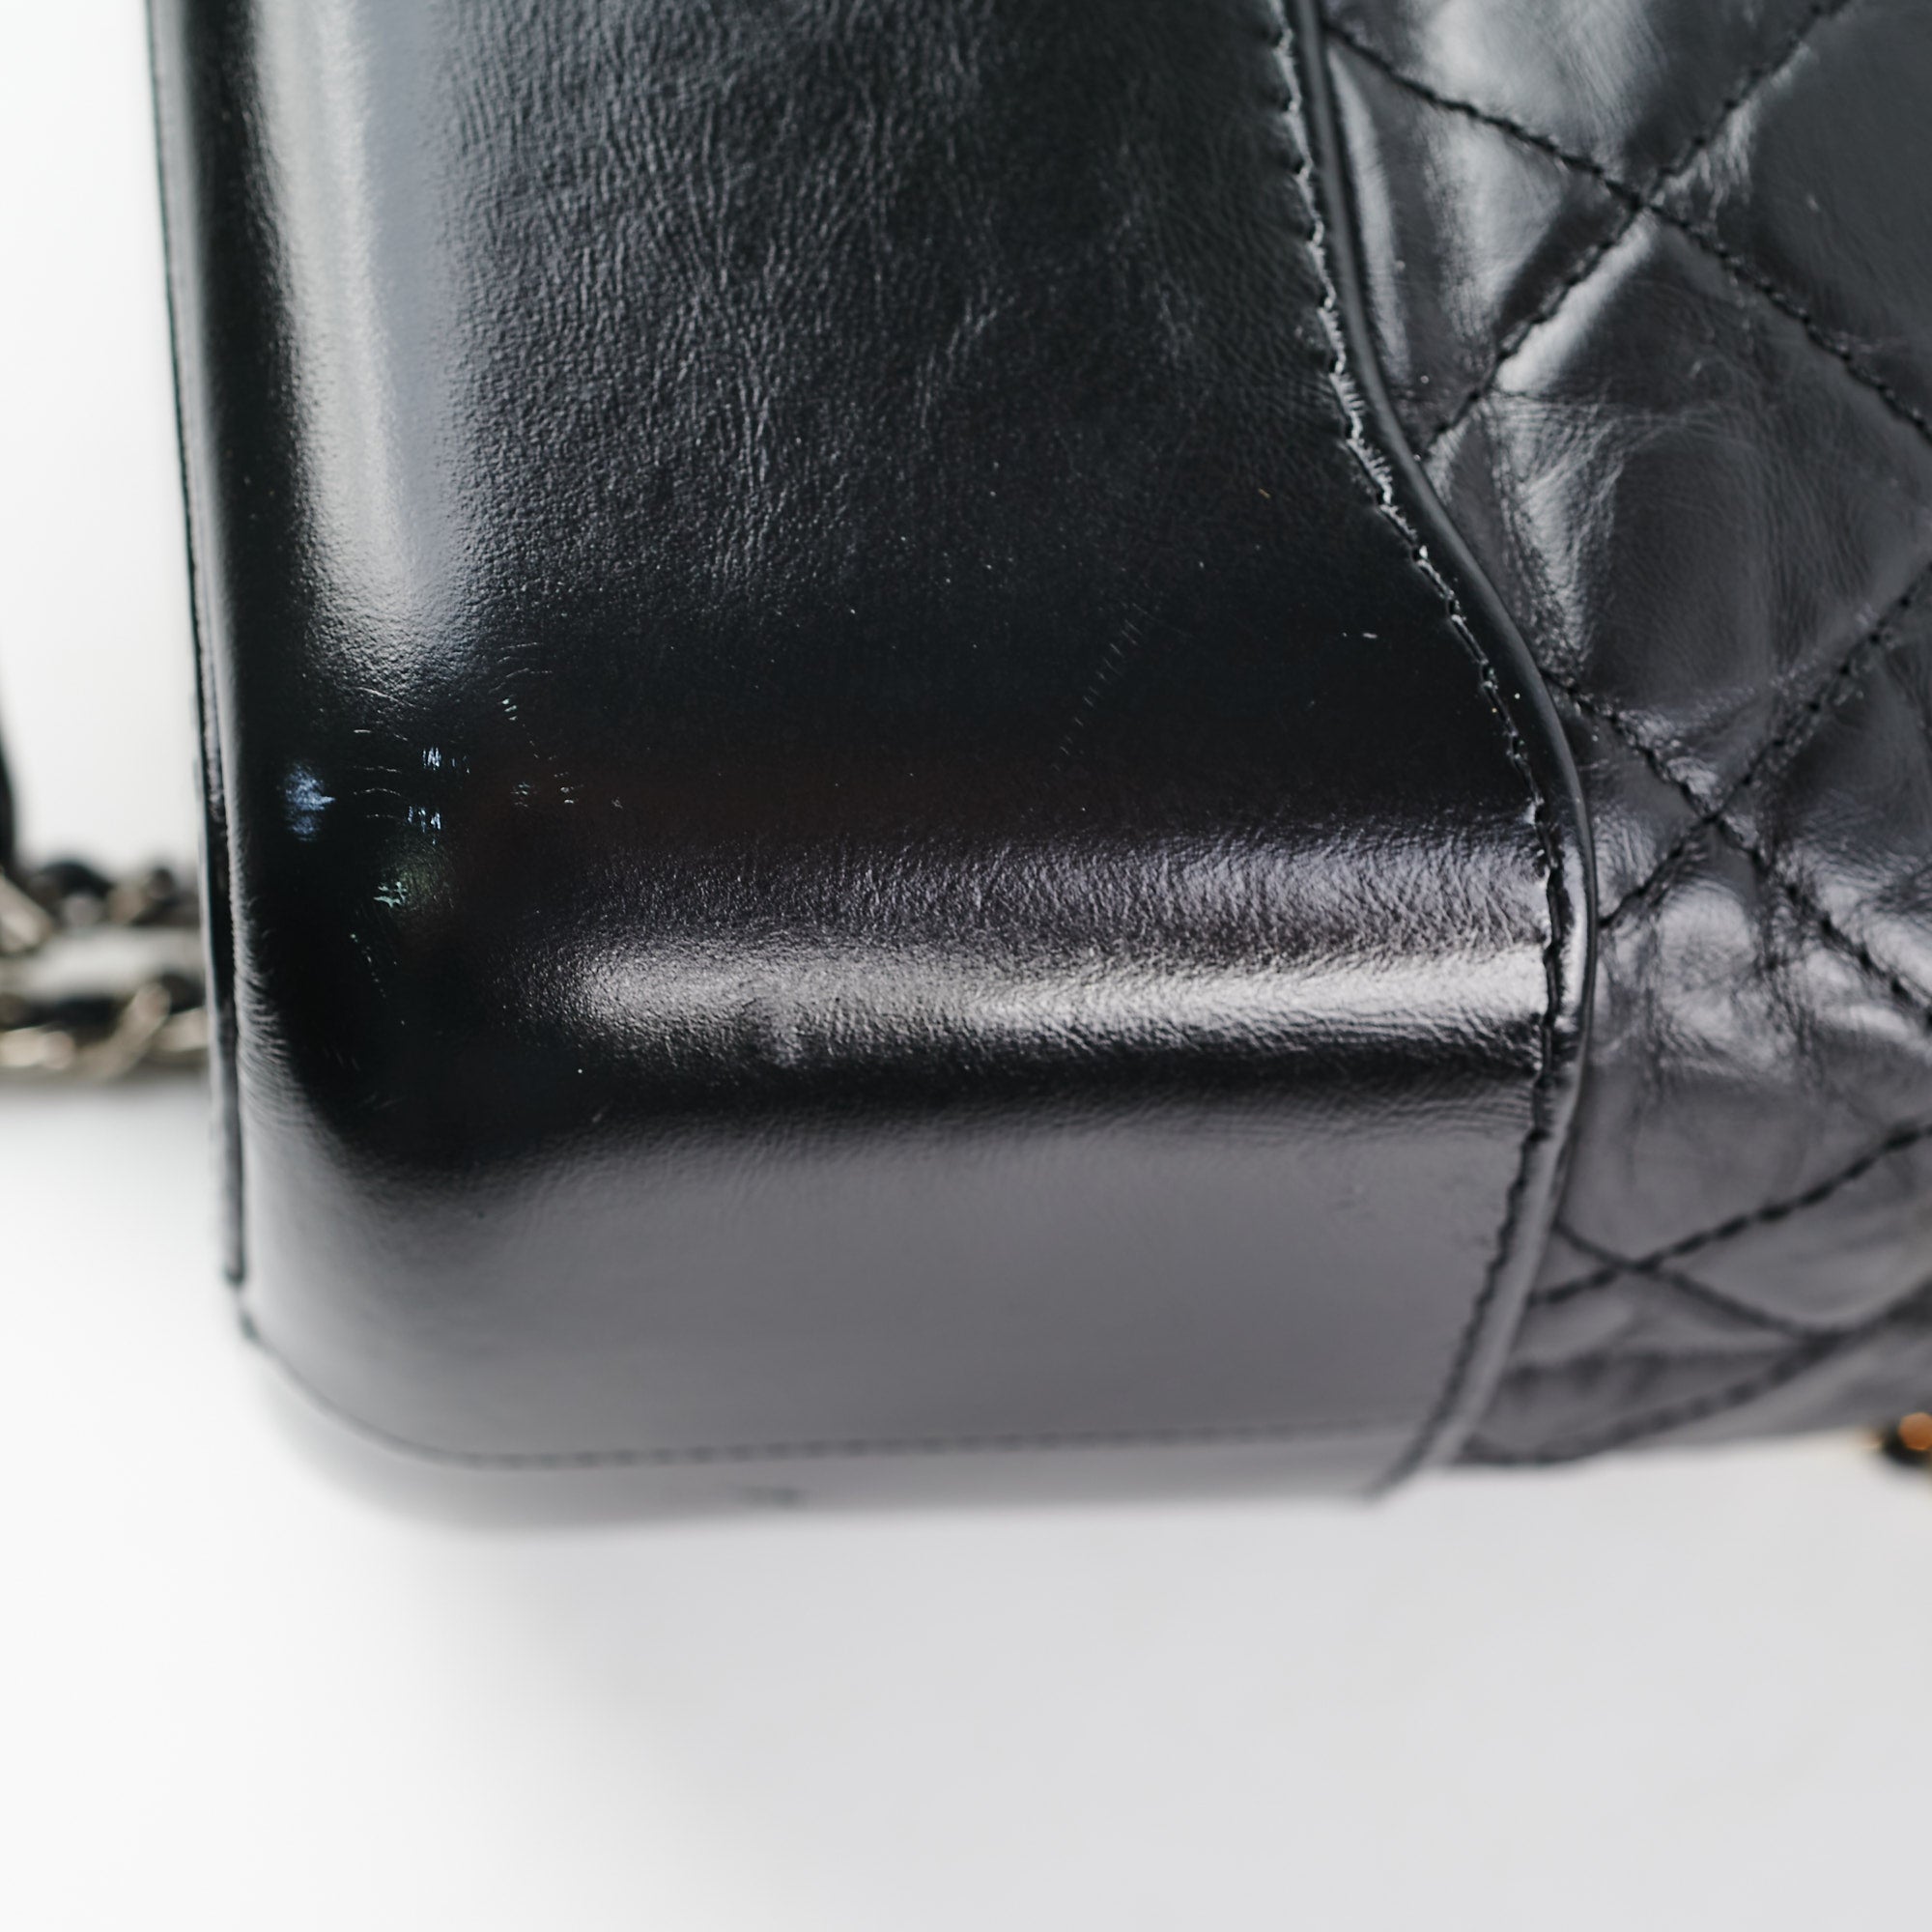 17A Chanel Black Large Gabrielle Tote Bag – Boutique Patina